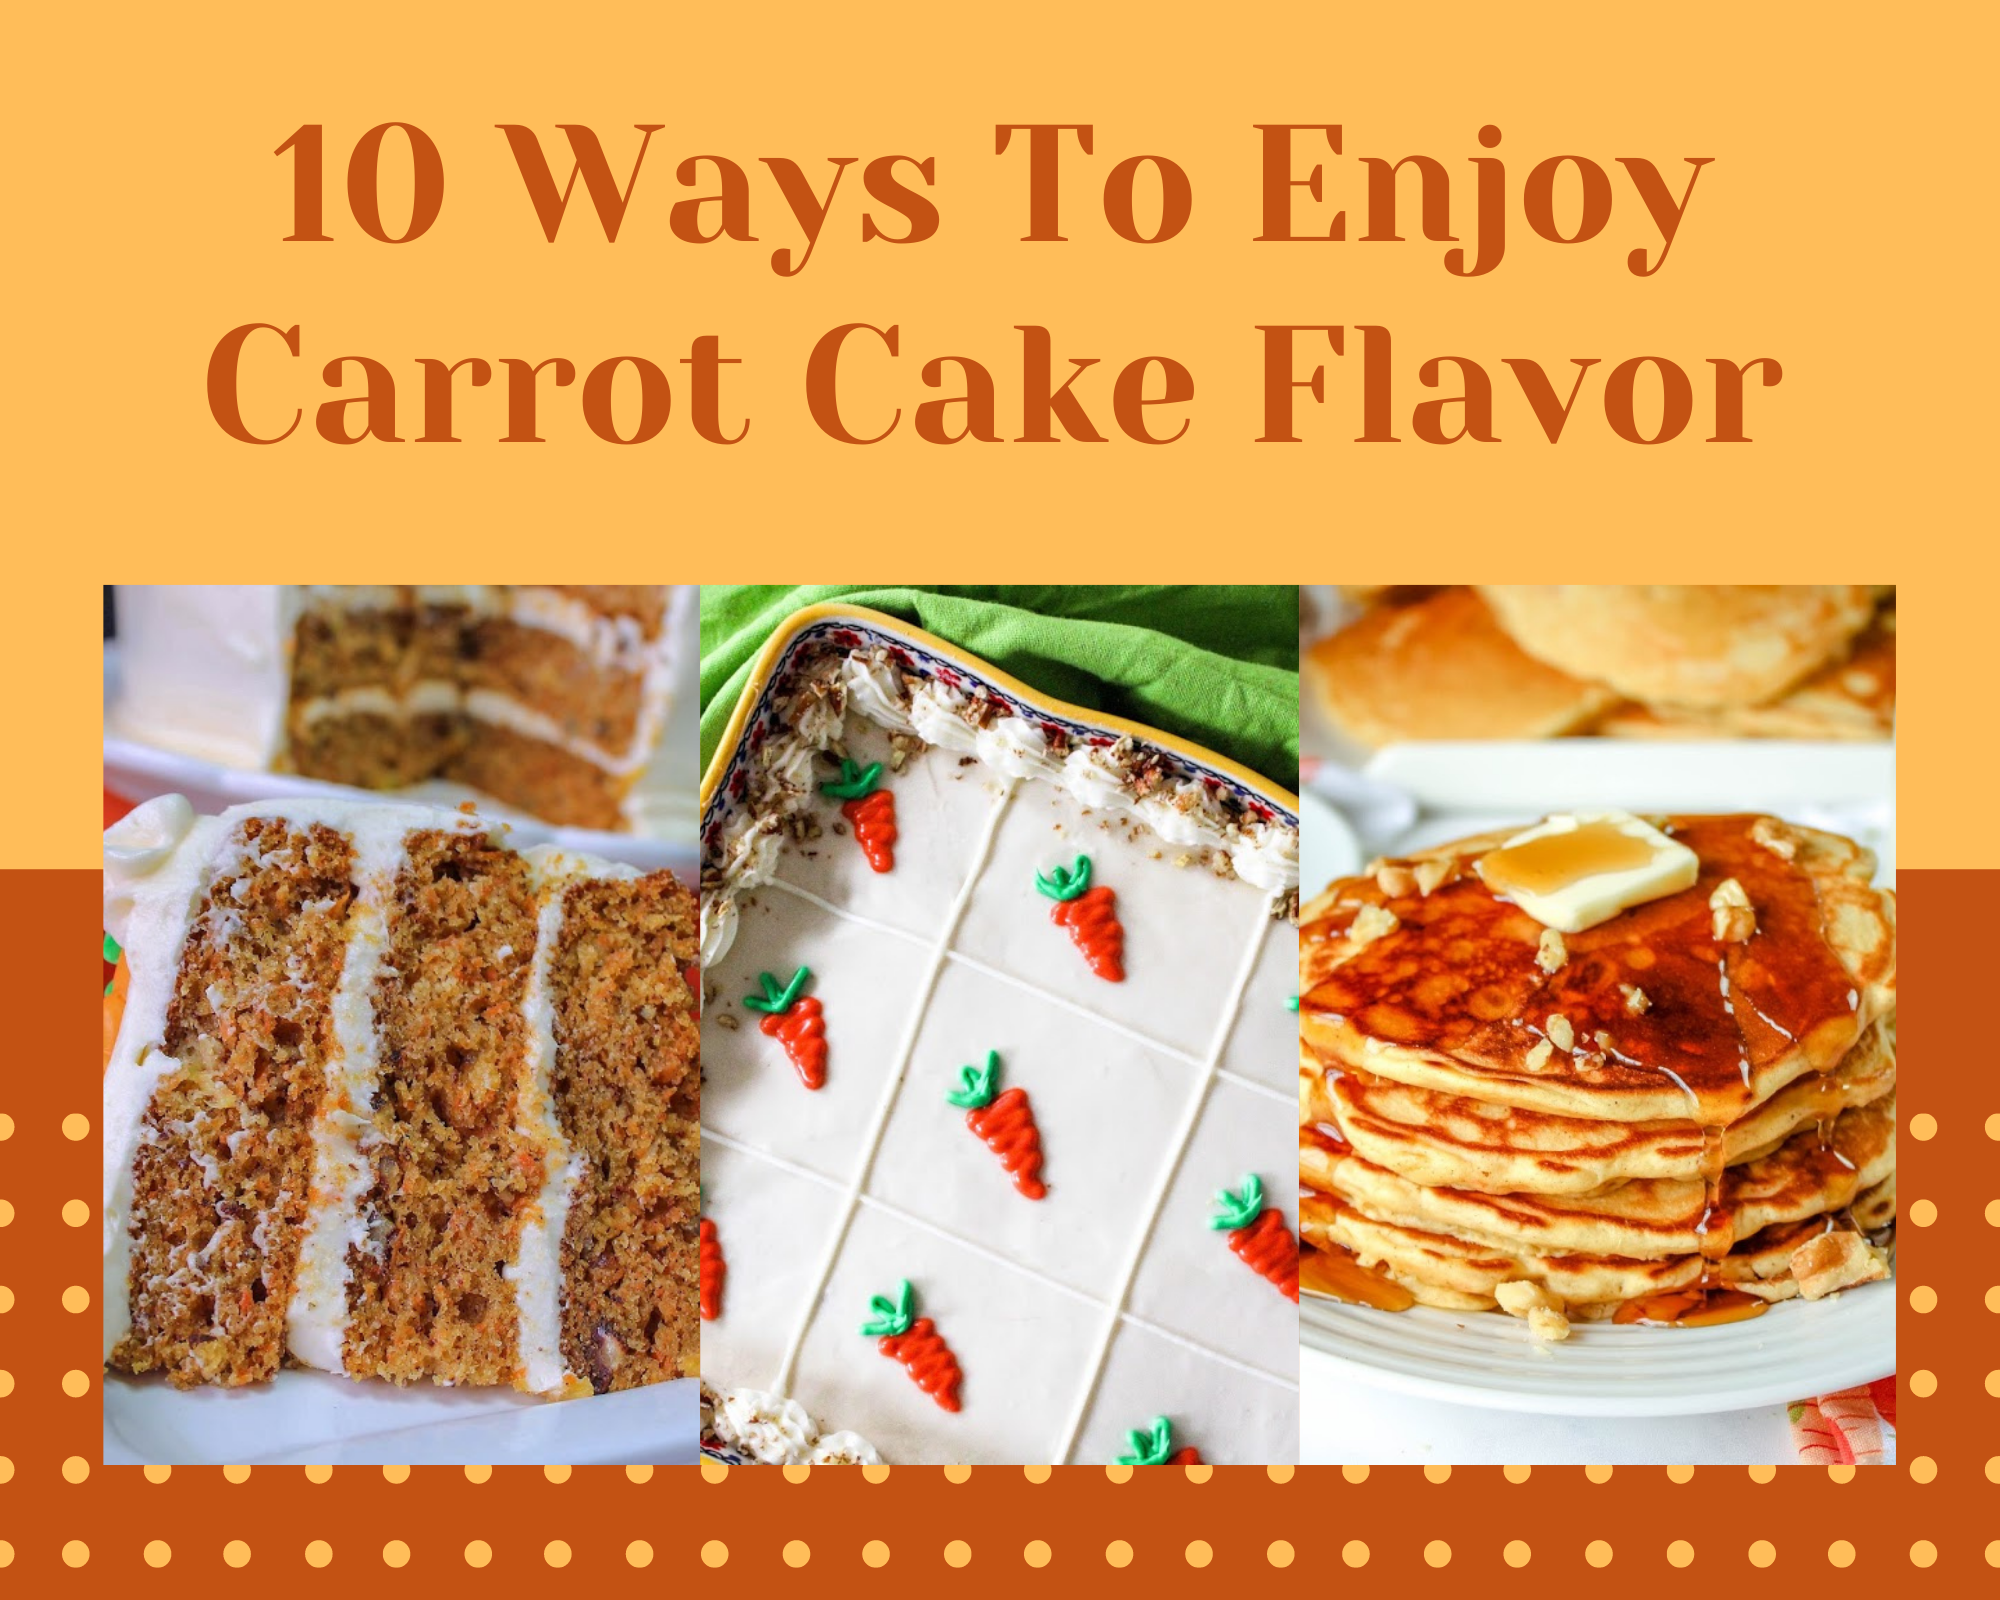 Carrot cake recipes